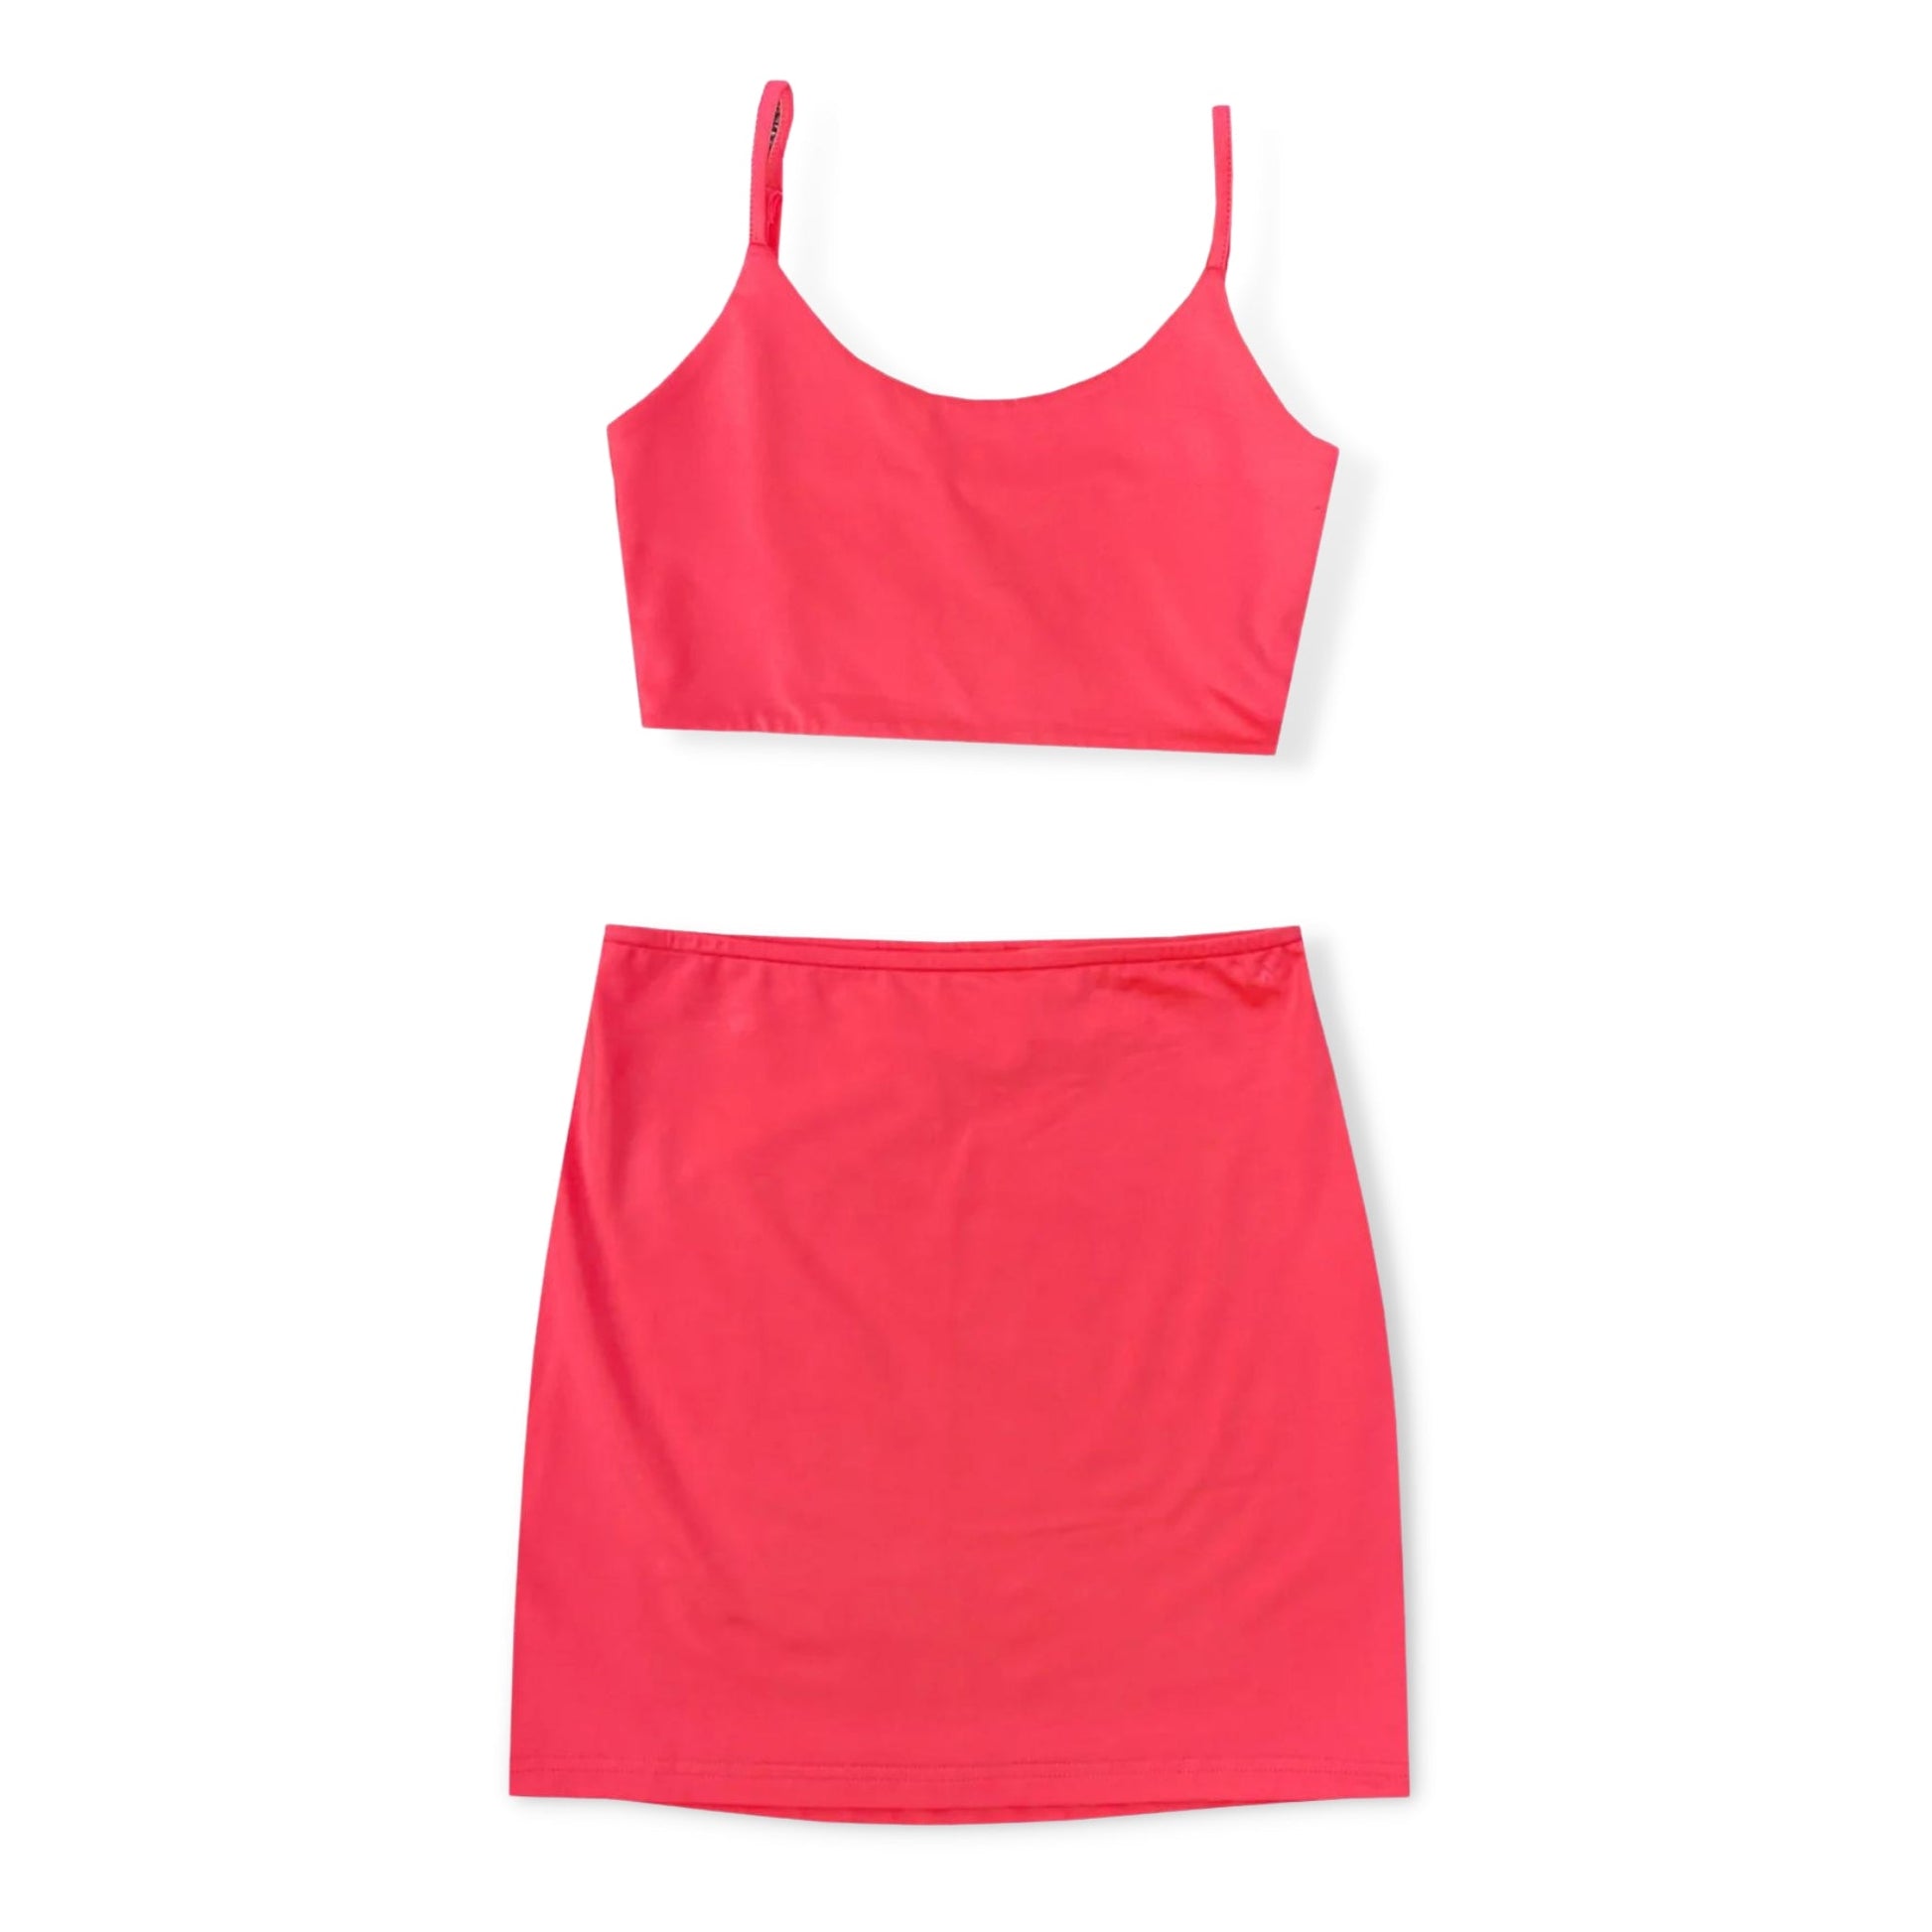 KatieJNYC Neon Pink Gigi Skirt - a Spirit Animal - Skirt $30-$60 $90-$120 active December 2022